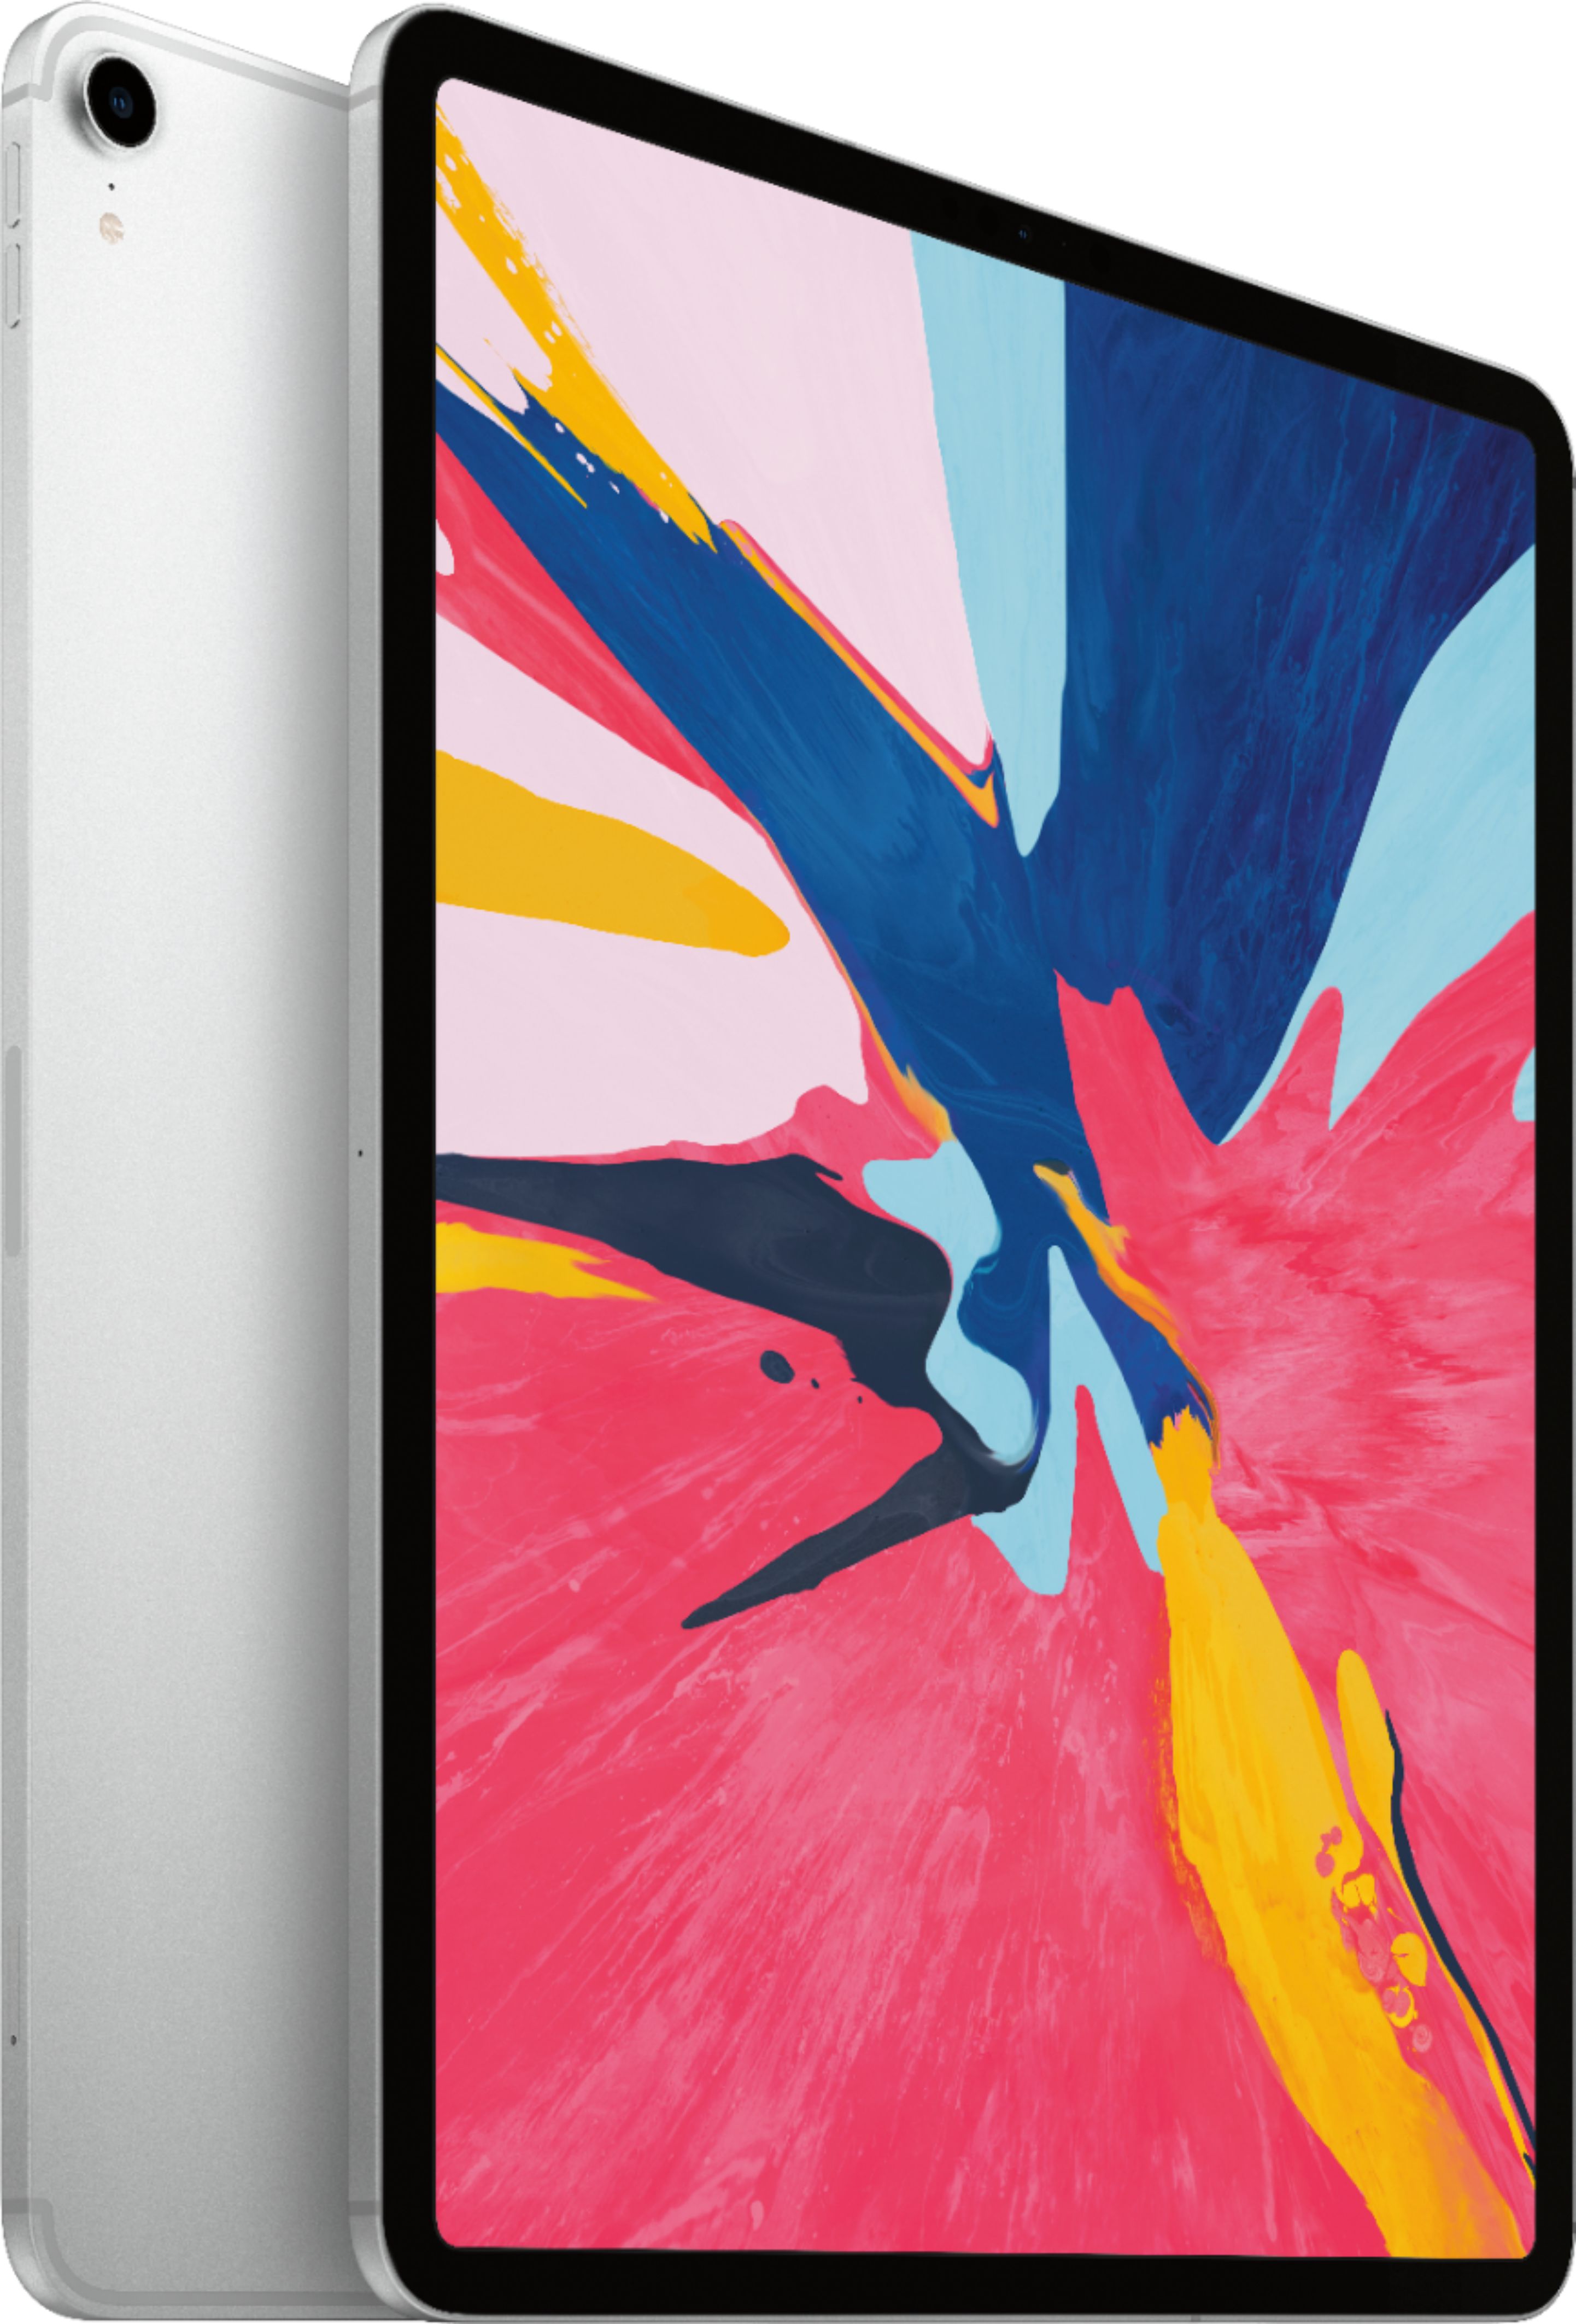 Angle View: 2019 Apple iPad Mini Wi-Fi 256GB - Space Gray (5th Generation)